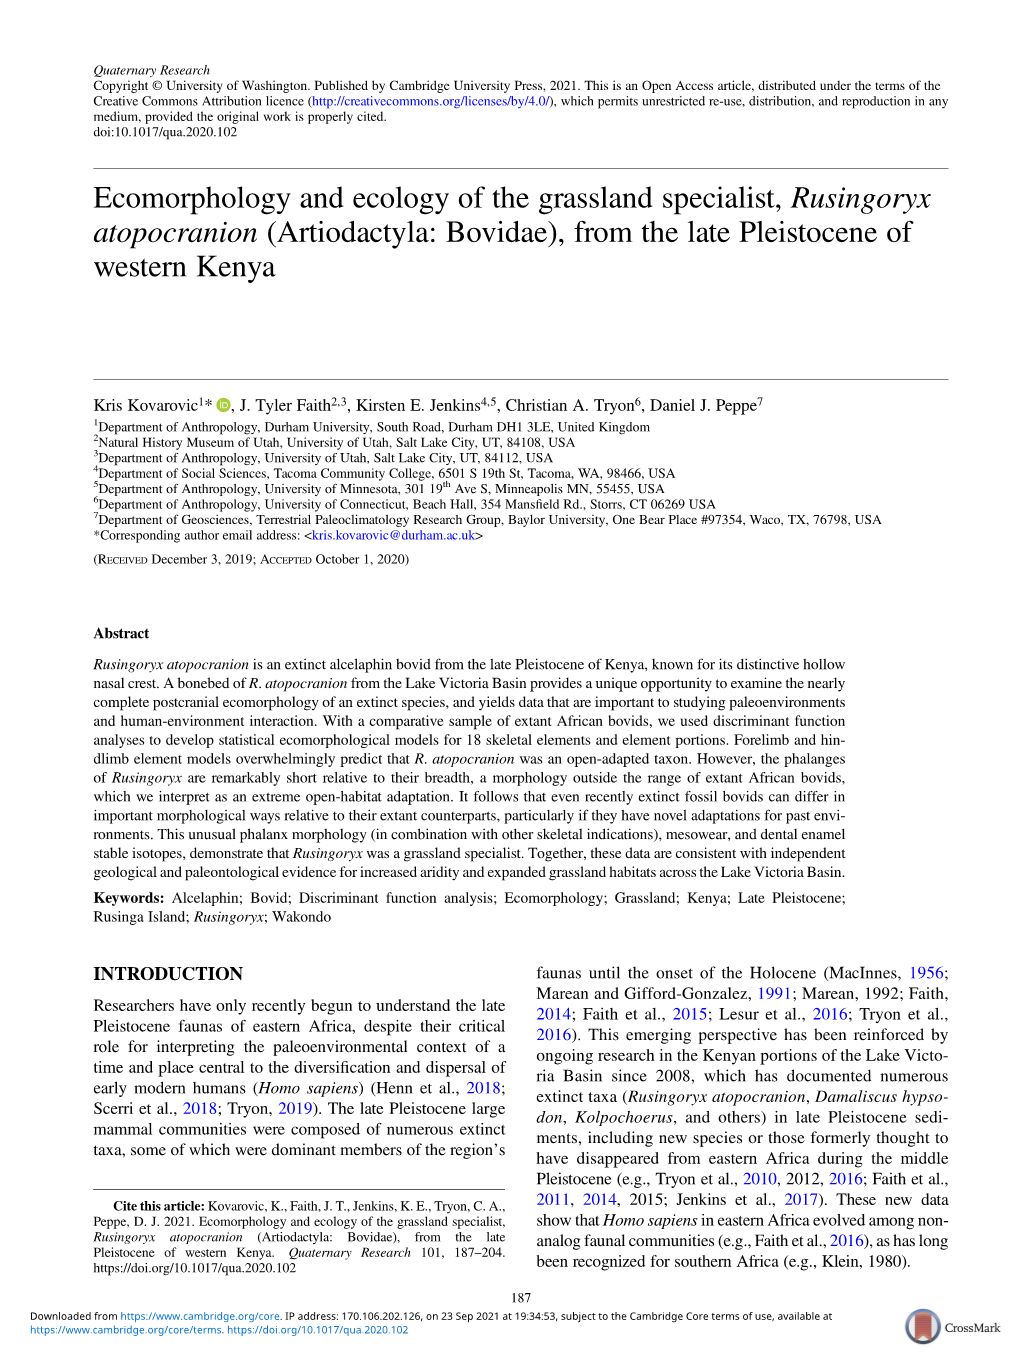 Ecomorphology and Ecology of the Grassland Specialist, Rusingoryx Atopocranion (Artiodactyla: Bovidae), from the Late Pleistocene of Western Kenya